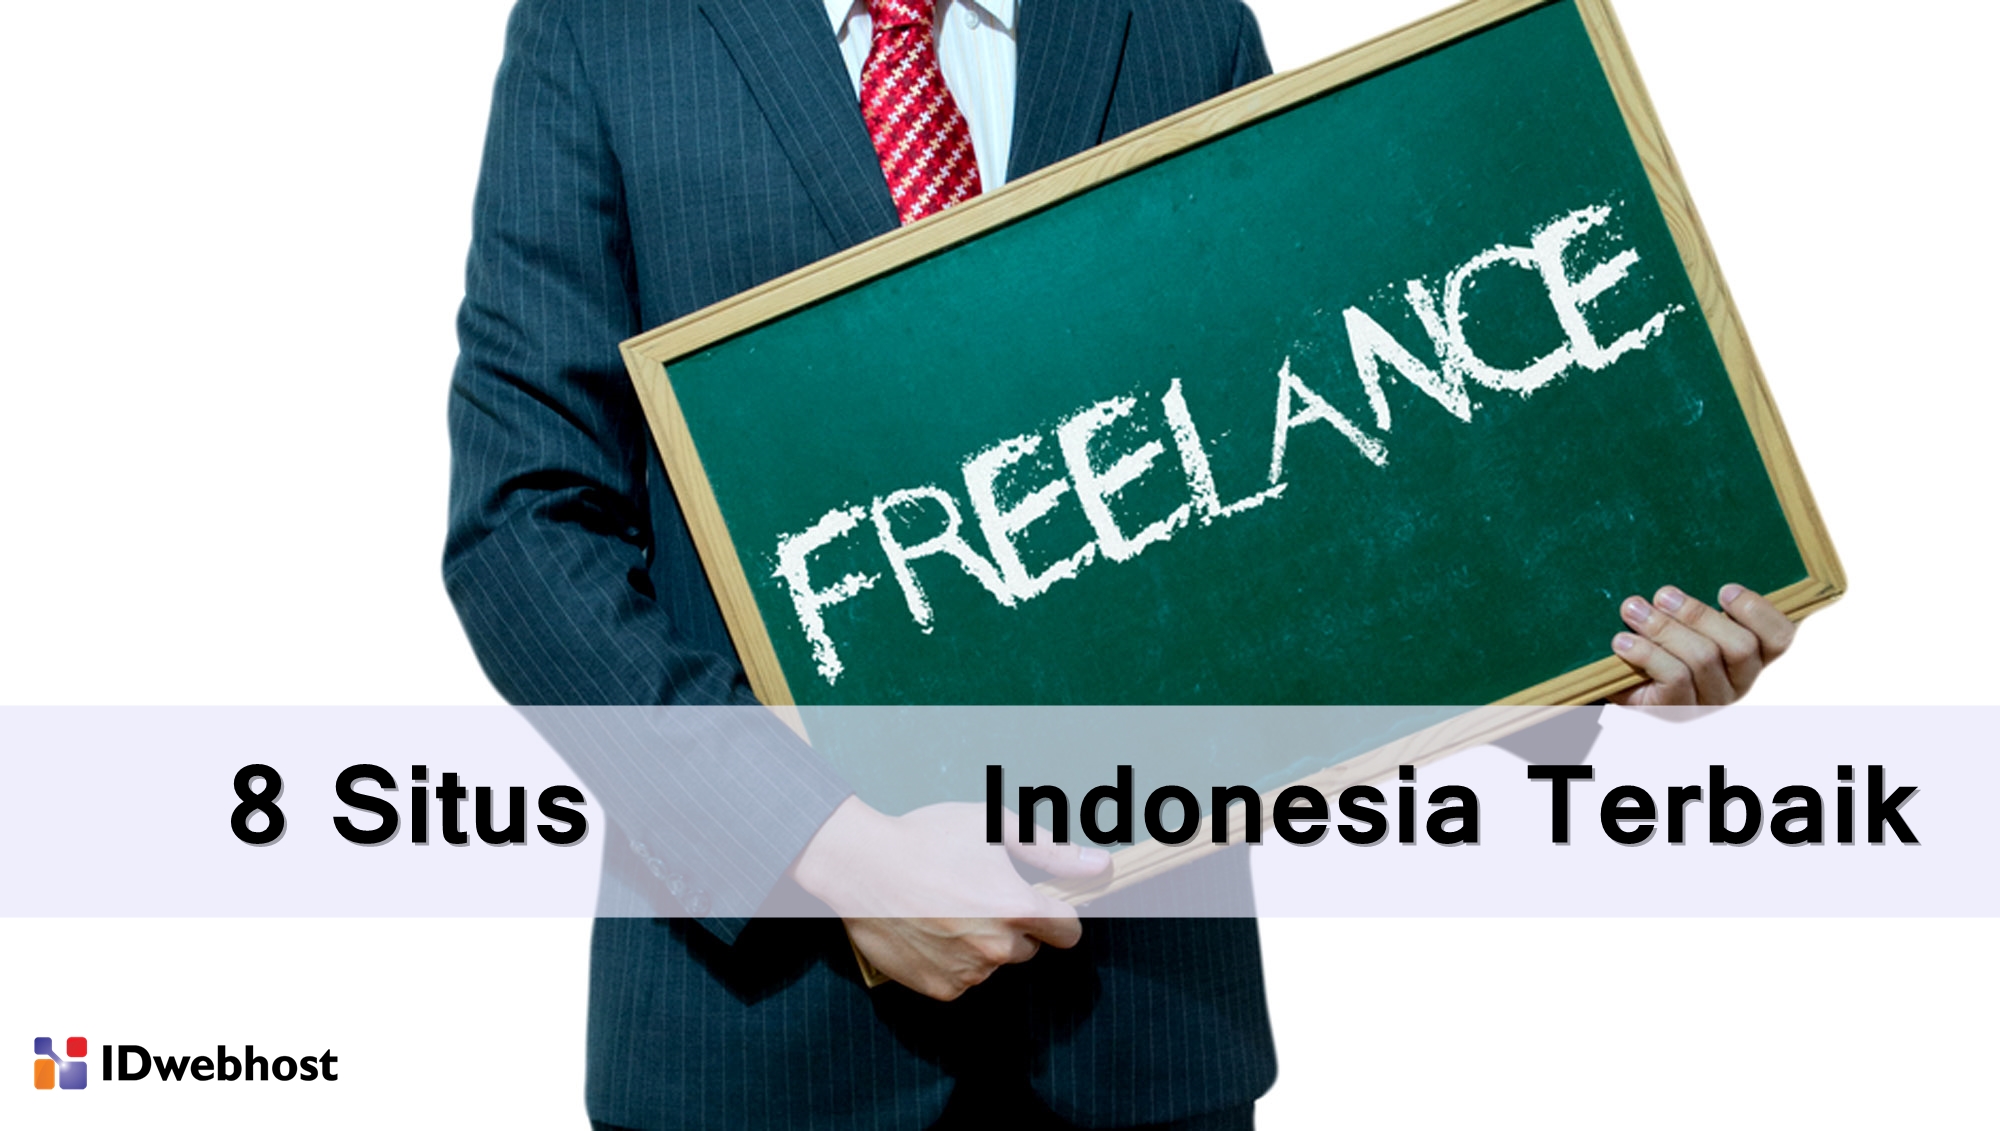 8 Situs Freelance Indonesia Terbaik